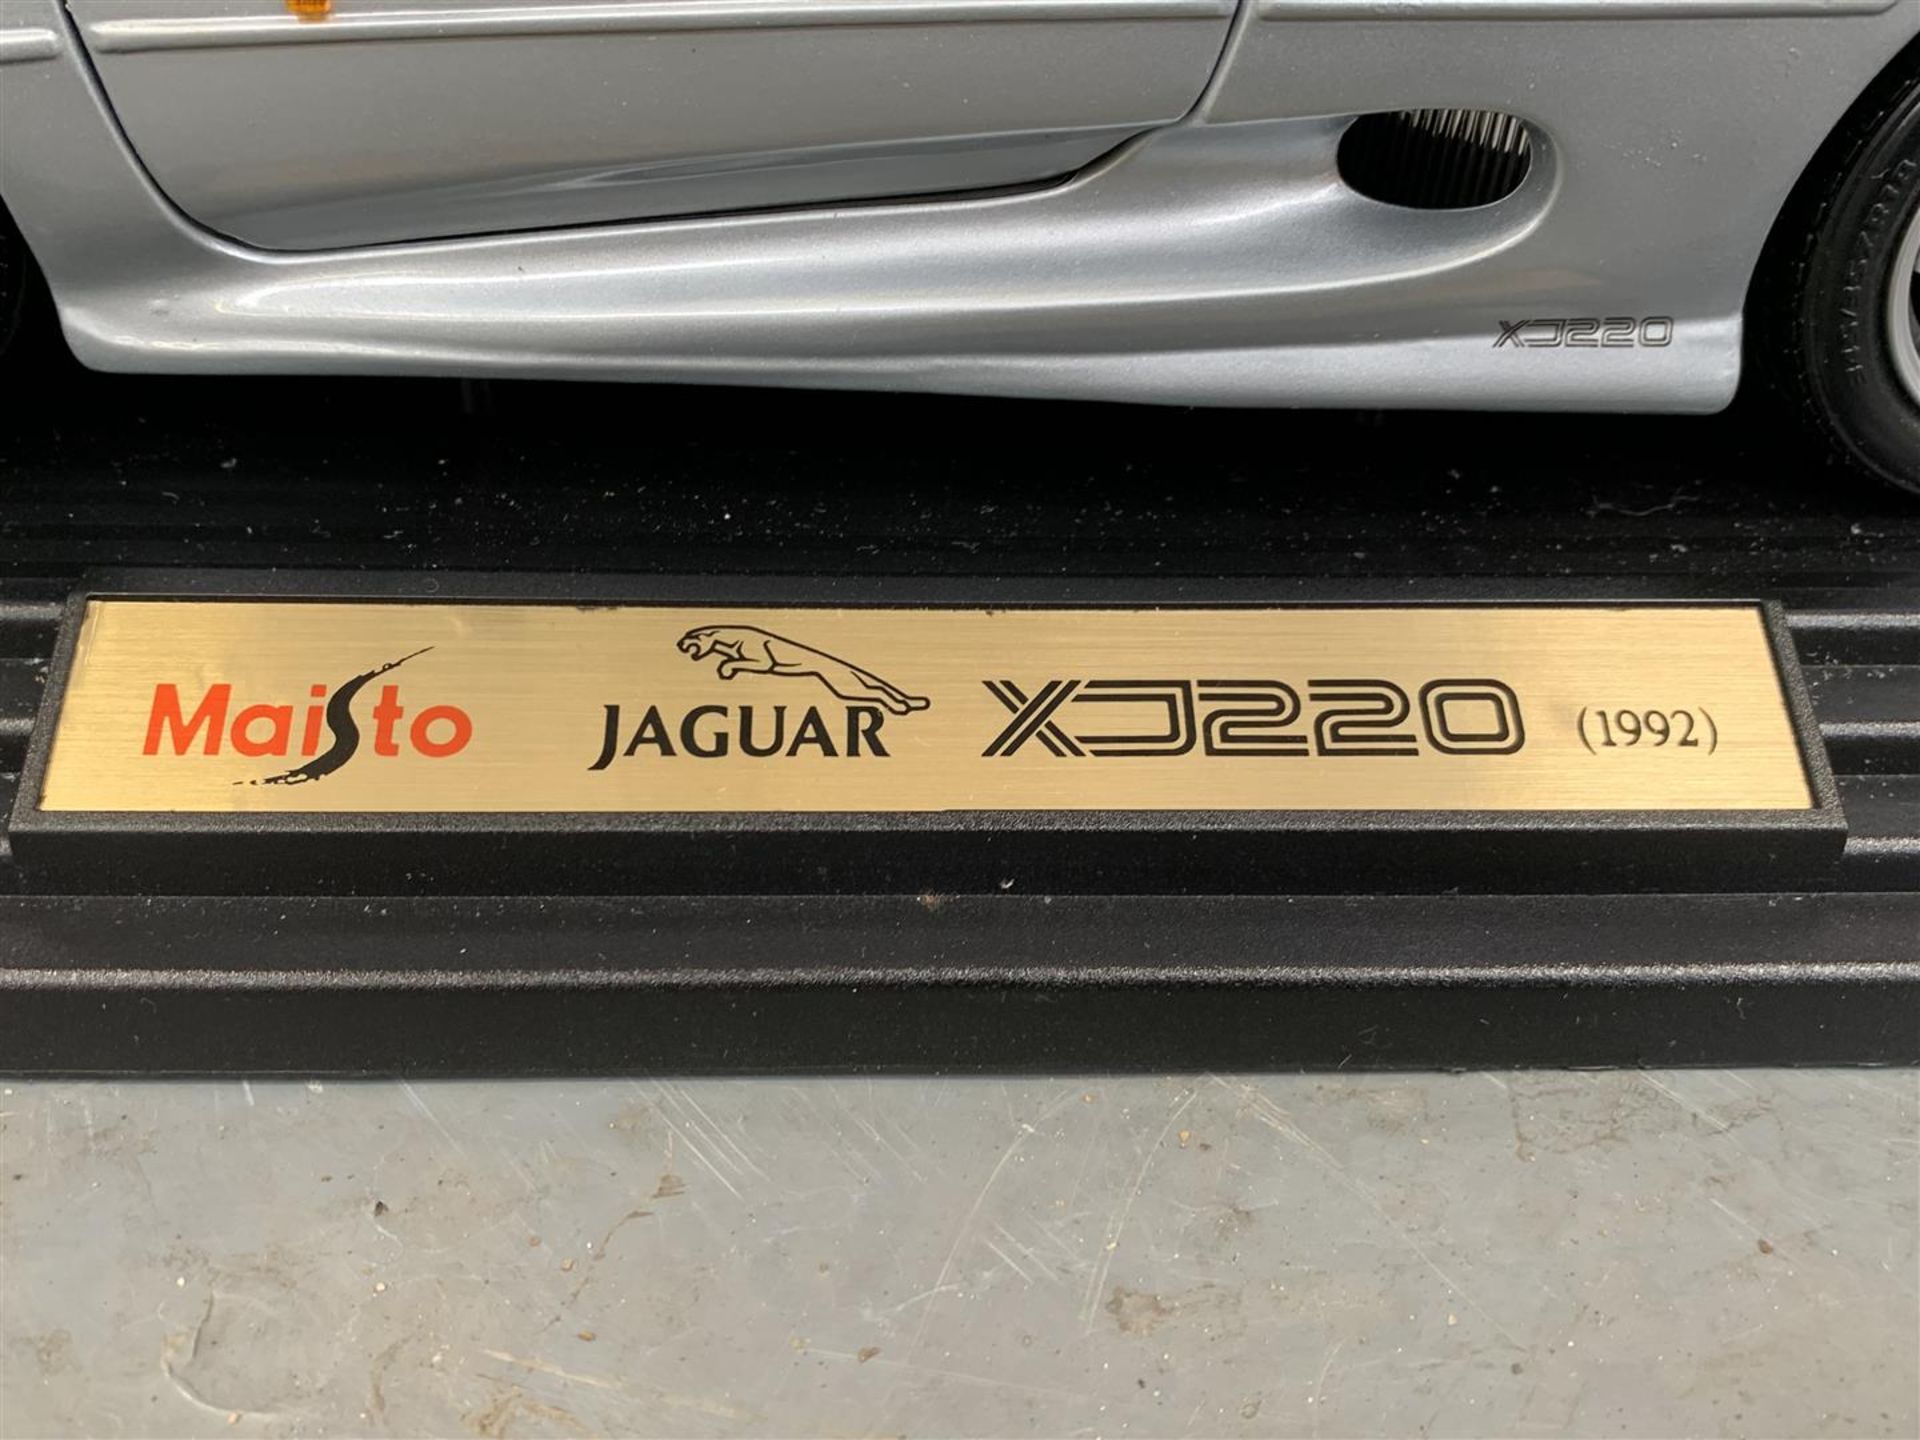 Maisto 1/12 Scale Jaguar XJ220 Boxed Model Car - Image 3 of 5